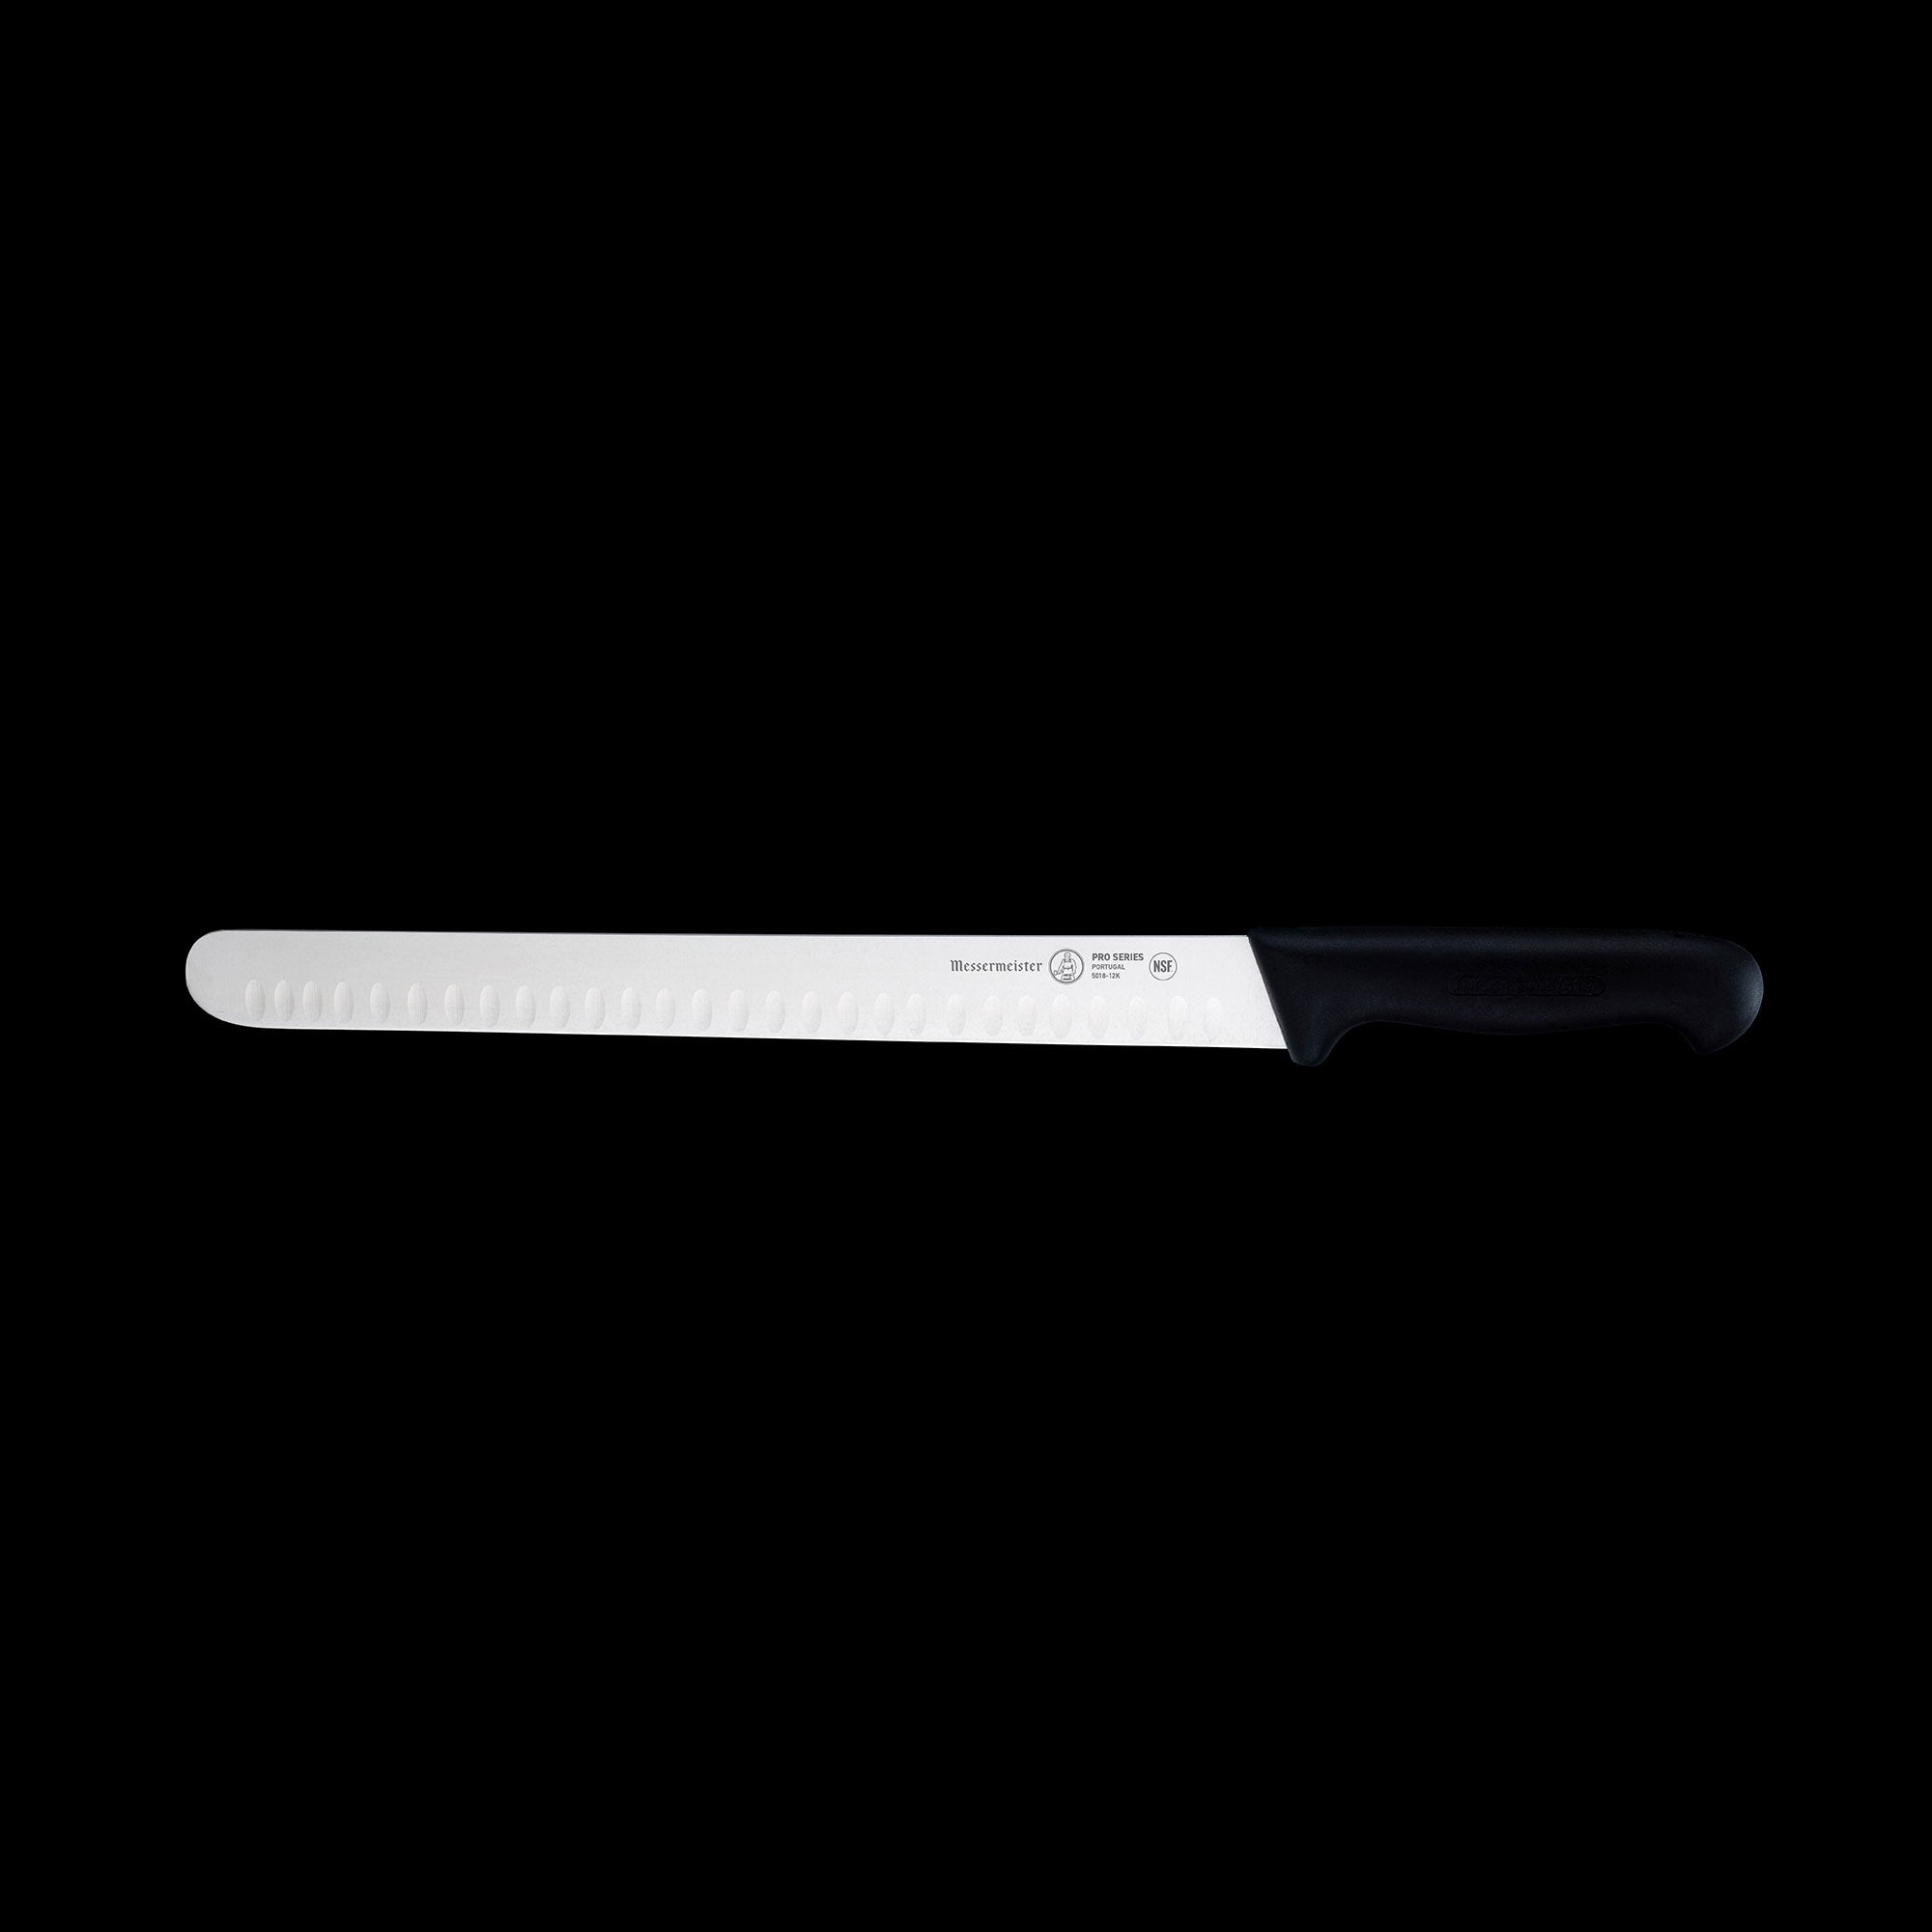 Messermeister Slicer Knife Edge Guard 8 inch Black